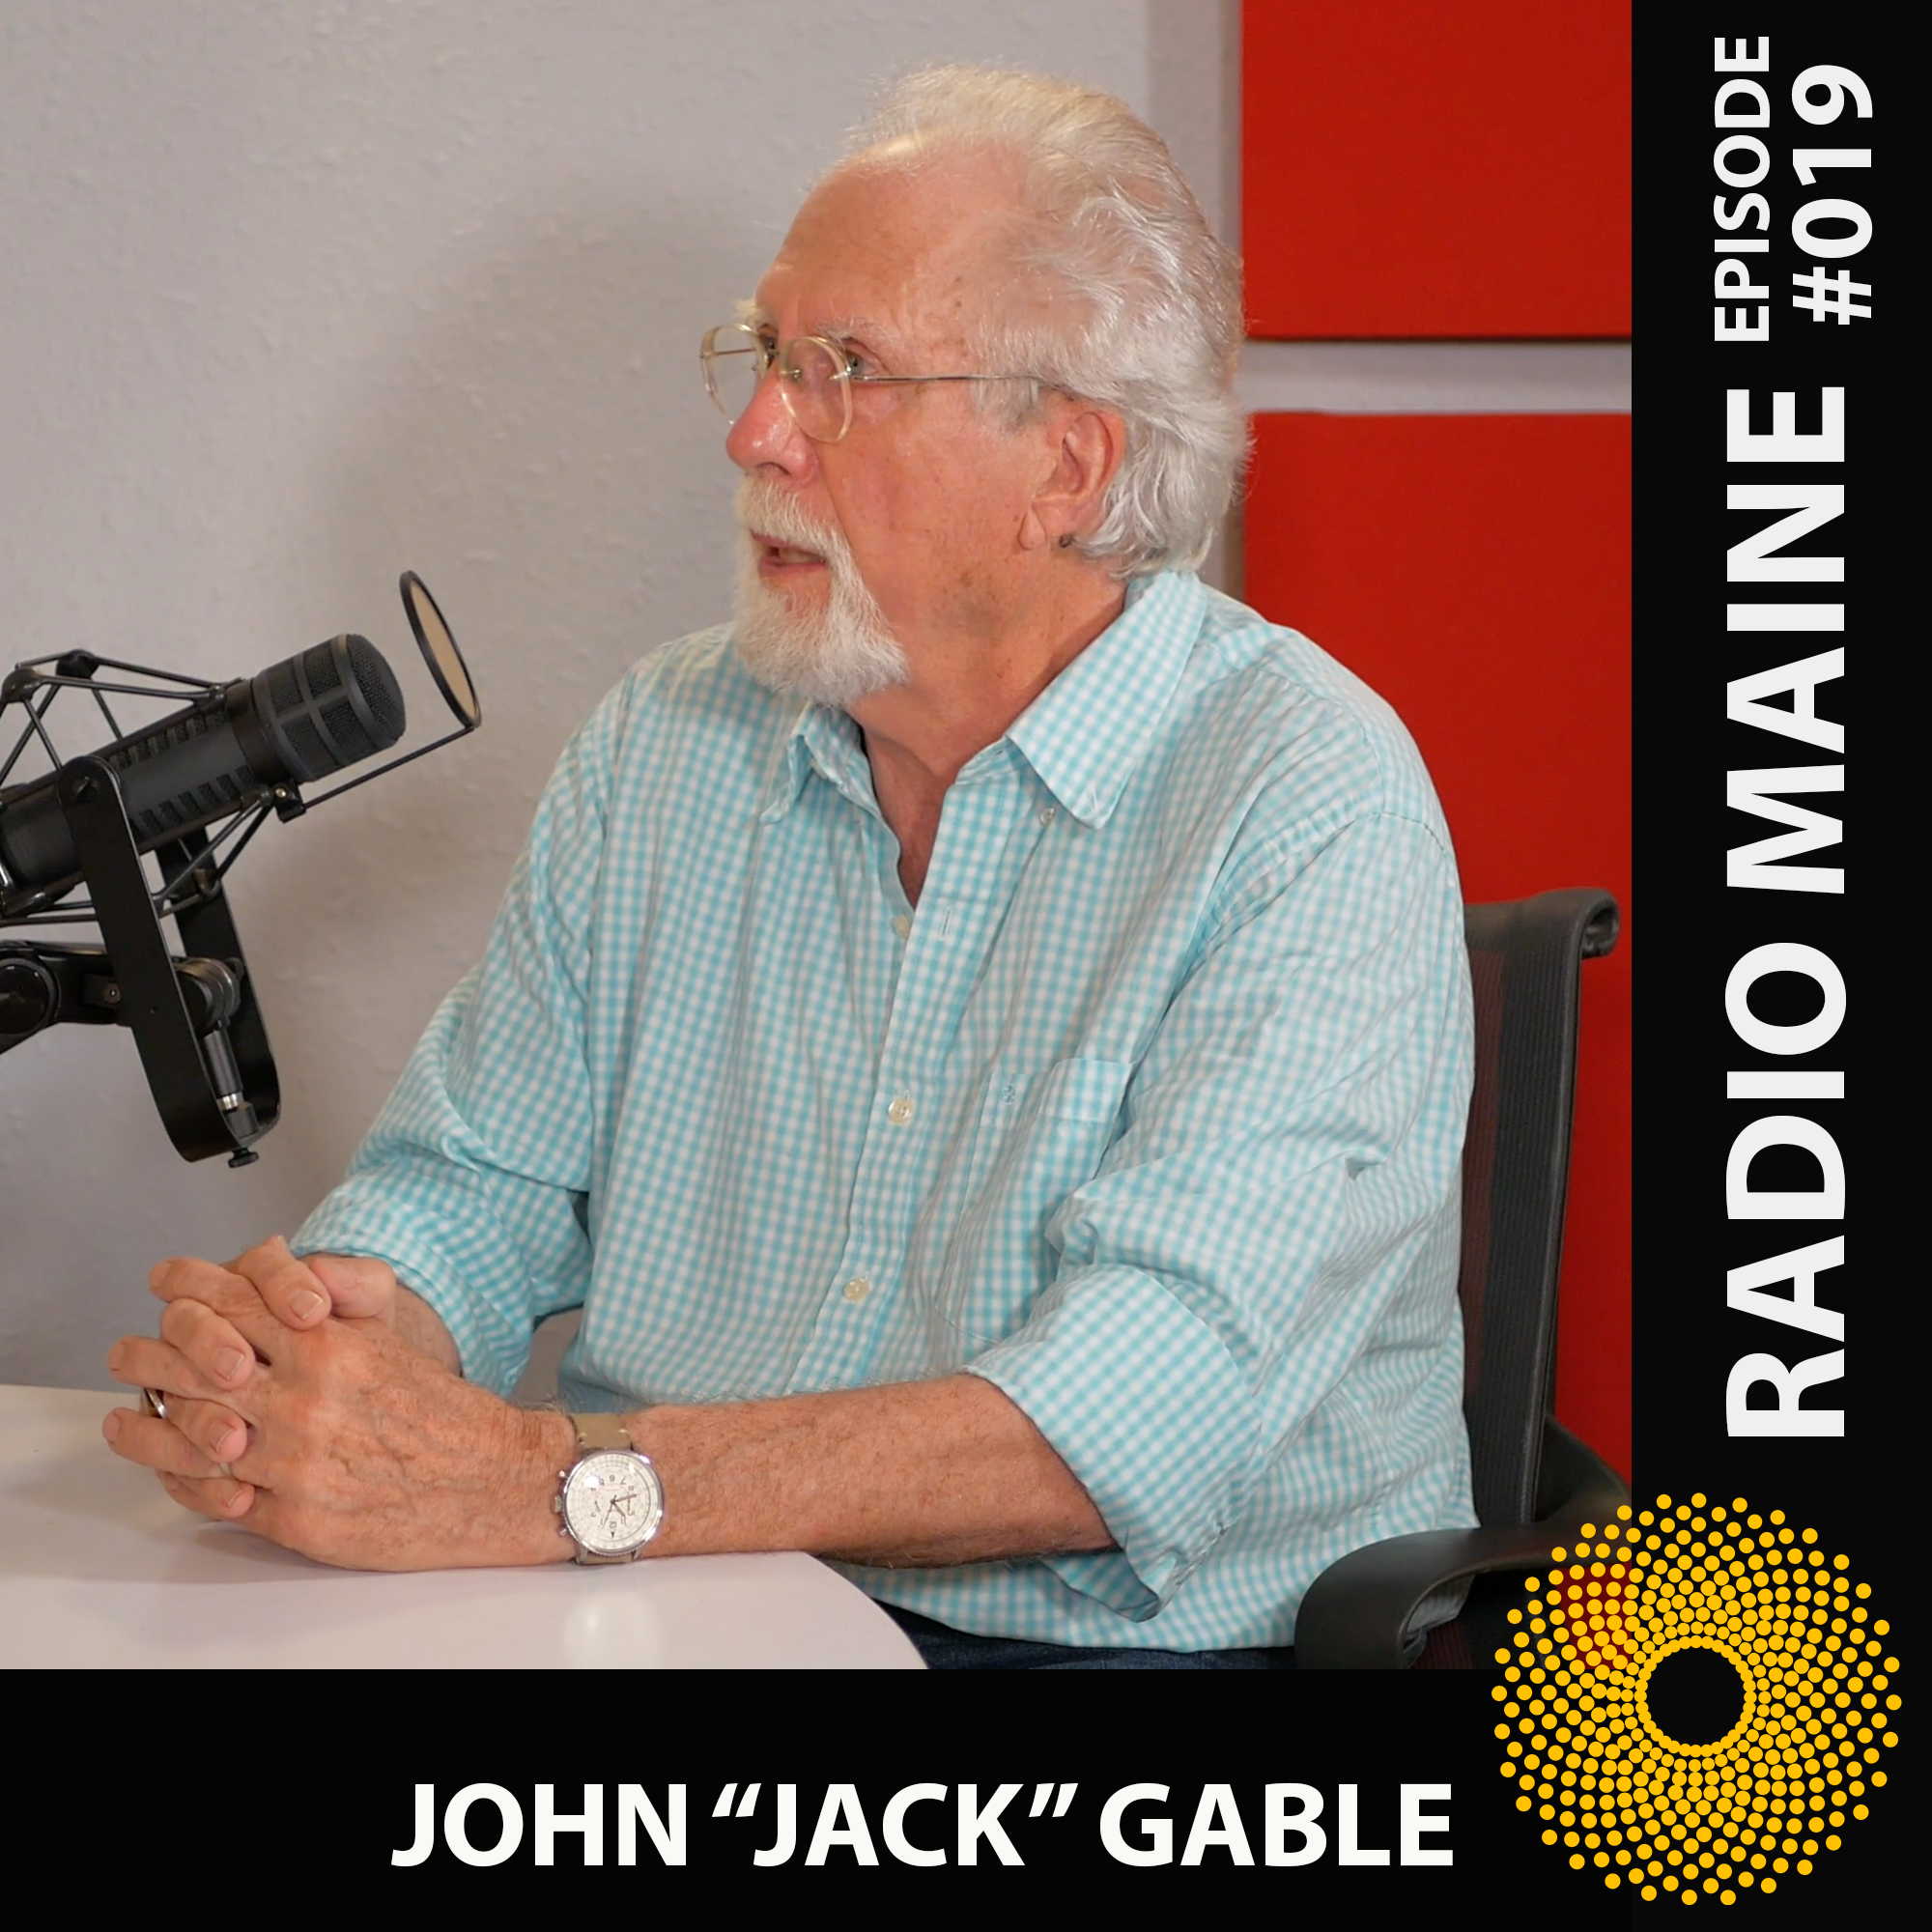 Maine artist John "Jack" Gable being interviewed on Radio Maine with Dr. Lisa Belisle